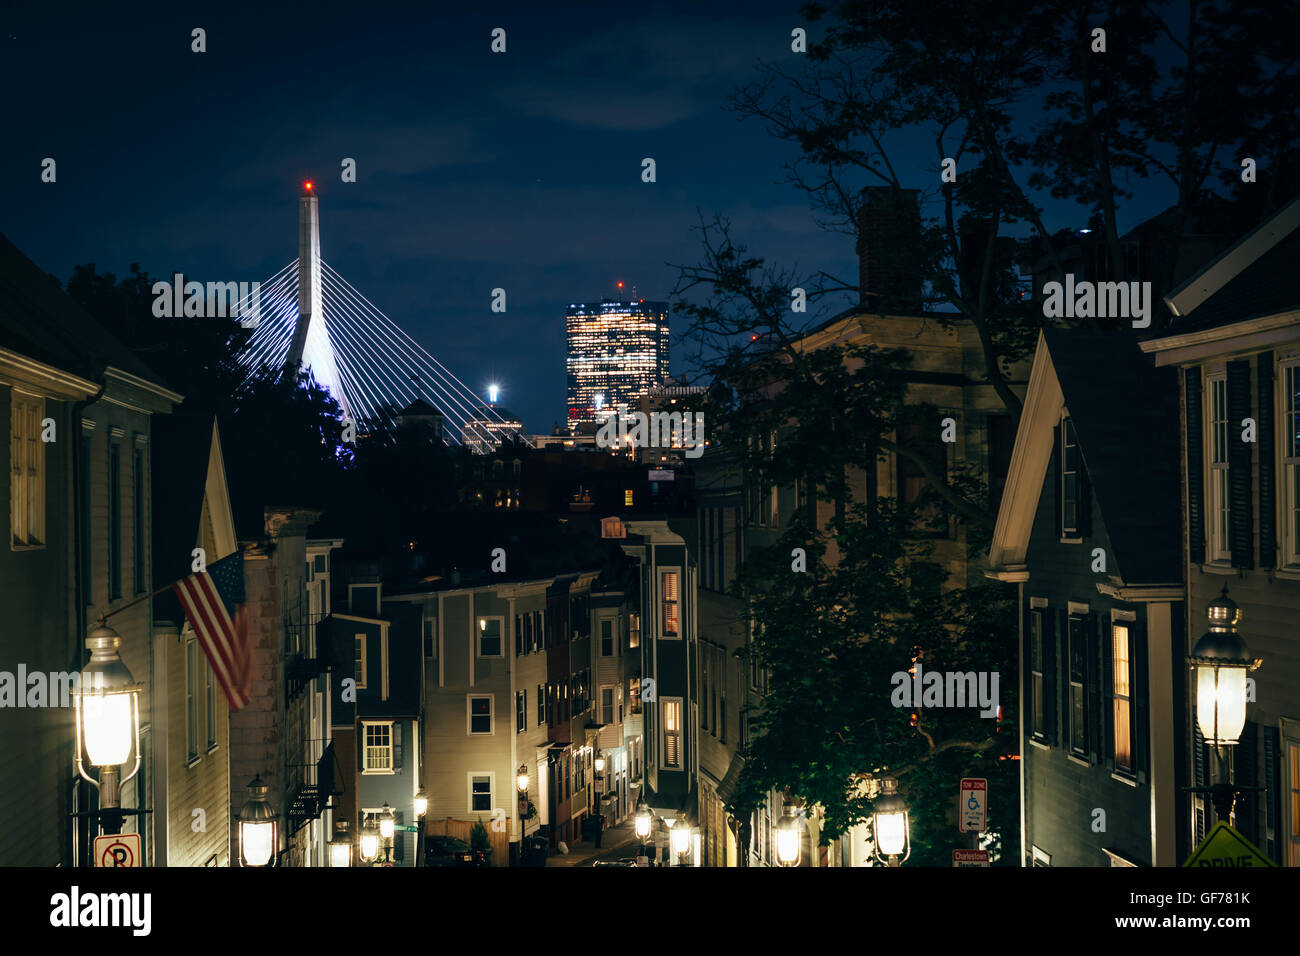 Pleasant Street and the Zakim Bridge in the distance at night, in Bunker Hill, Charlestown, Boston, Massachusetts. Stock Photo